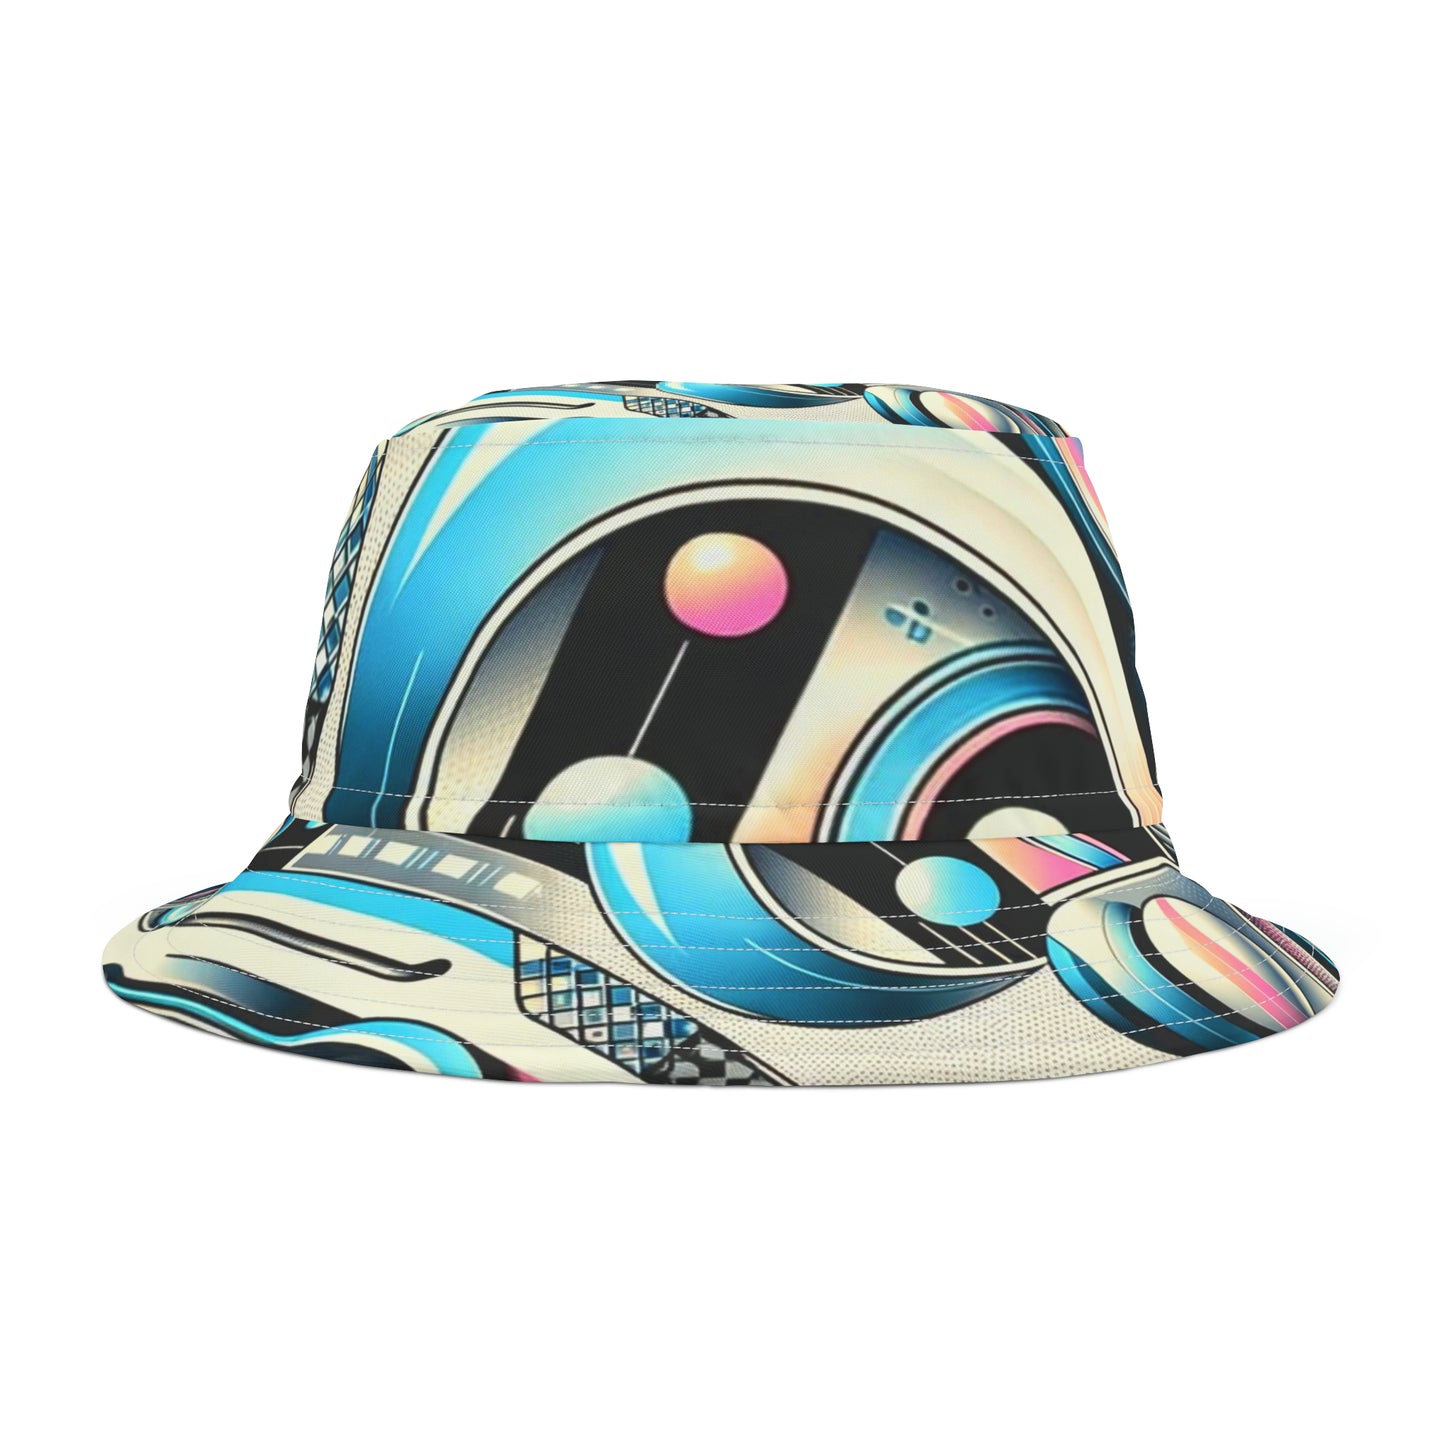 "Neon Echoes" Retro-Futuristic Bucket Hat